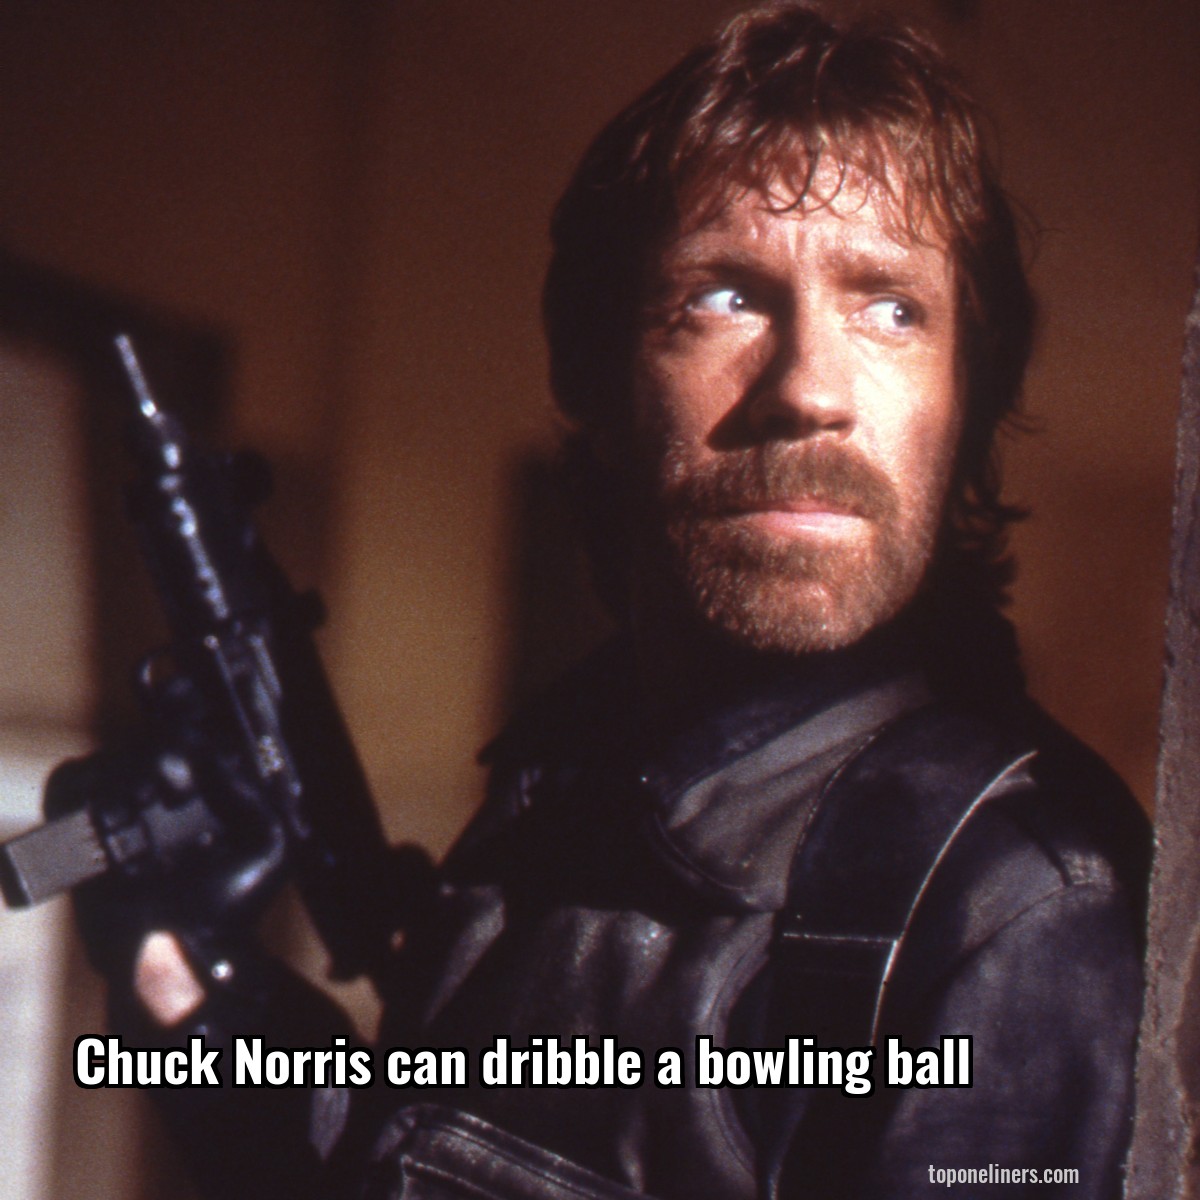 Chuck Norris can dribble a bowling ball